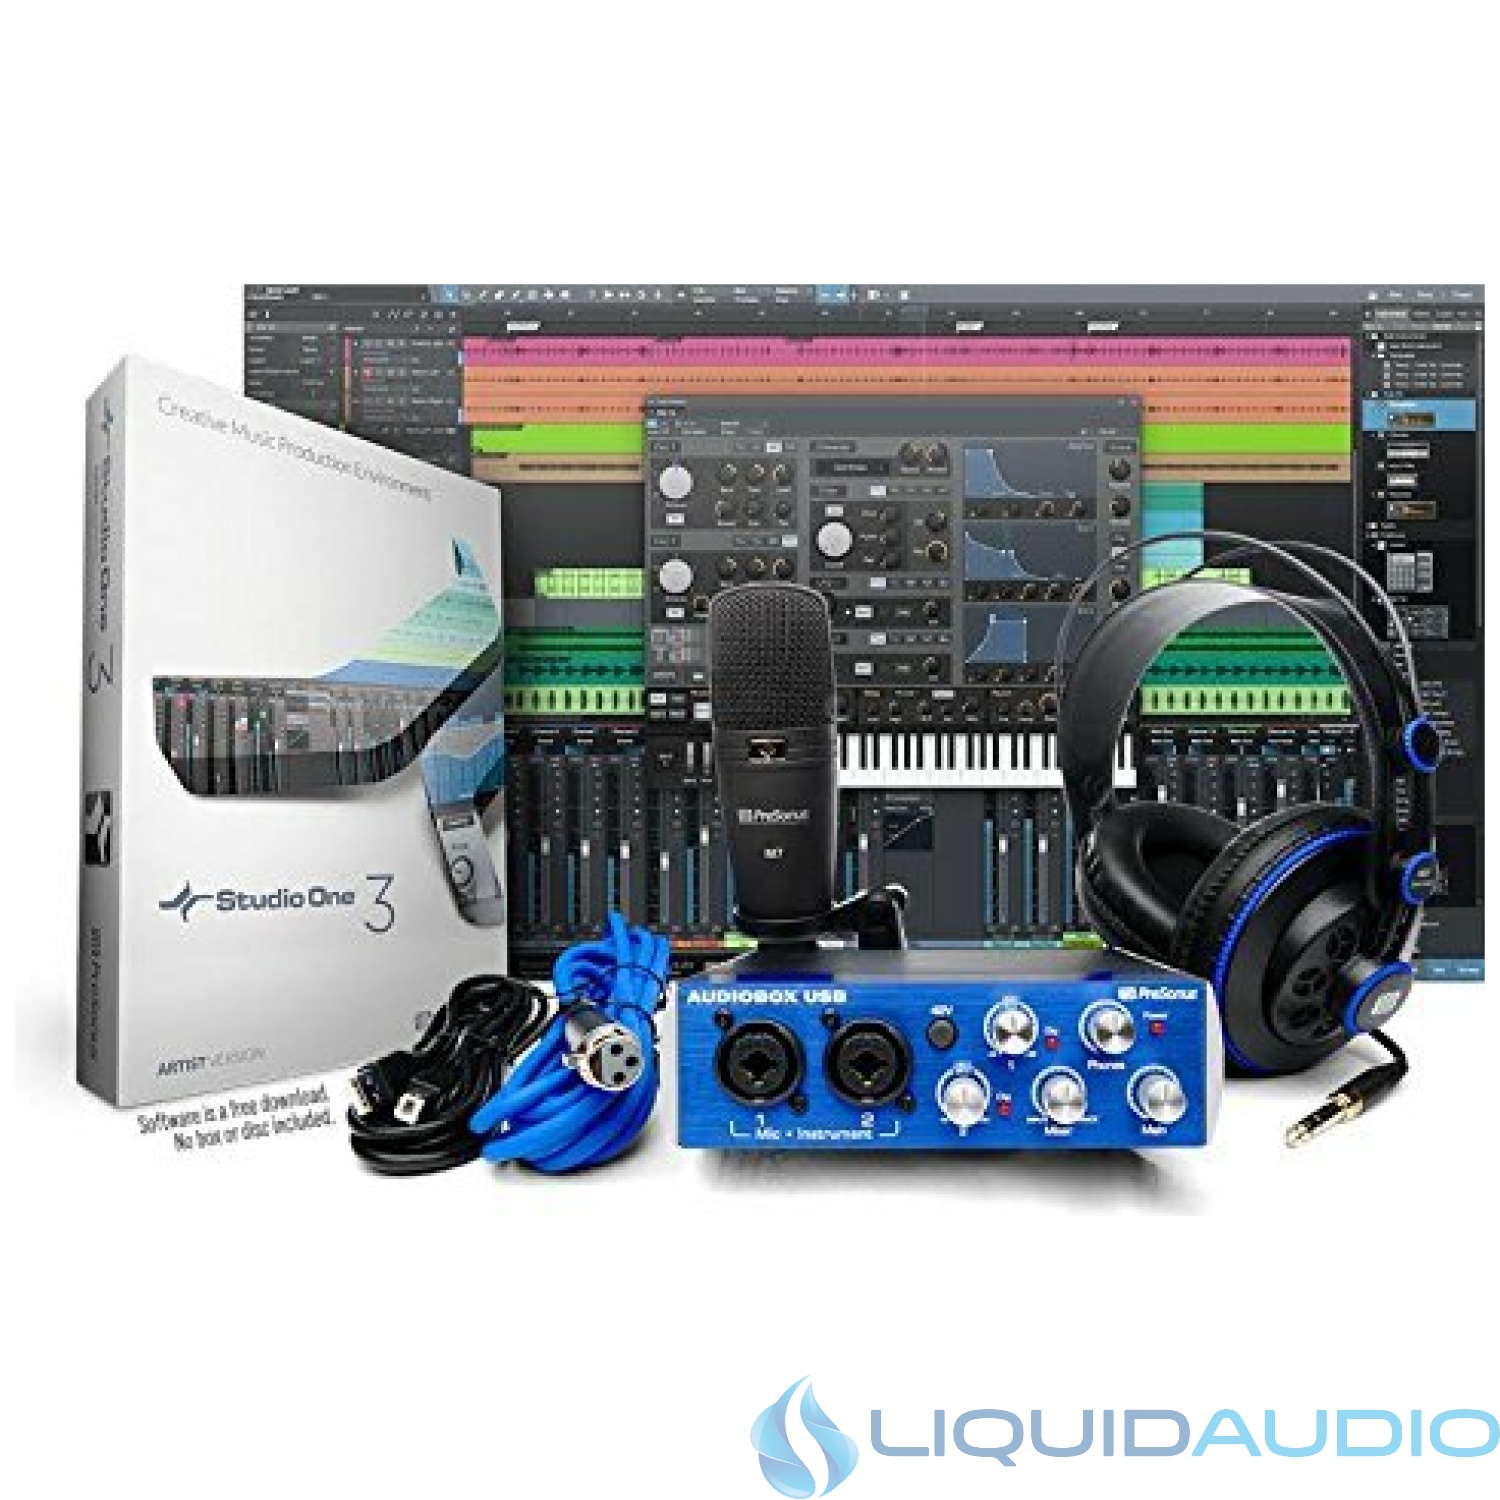 PreSonus AudioBox Studio with Headphones, Microphone, Mic Cable, USB Cable, and StudioOne Artist Software (Download)